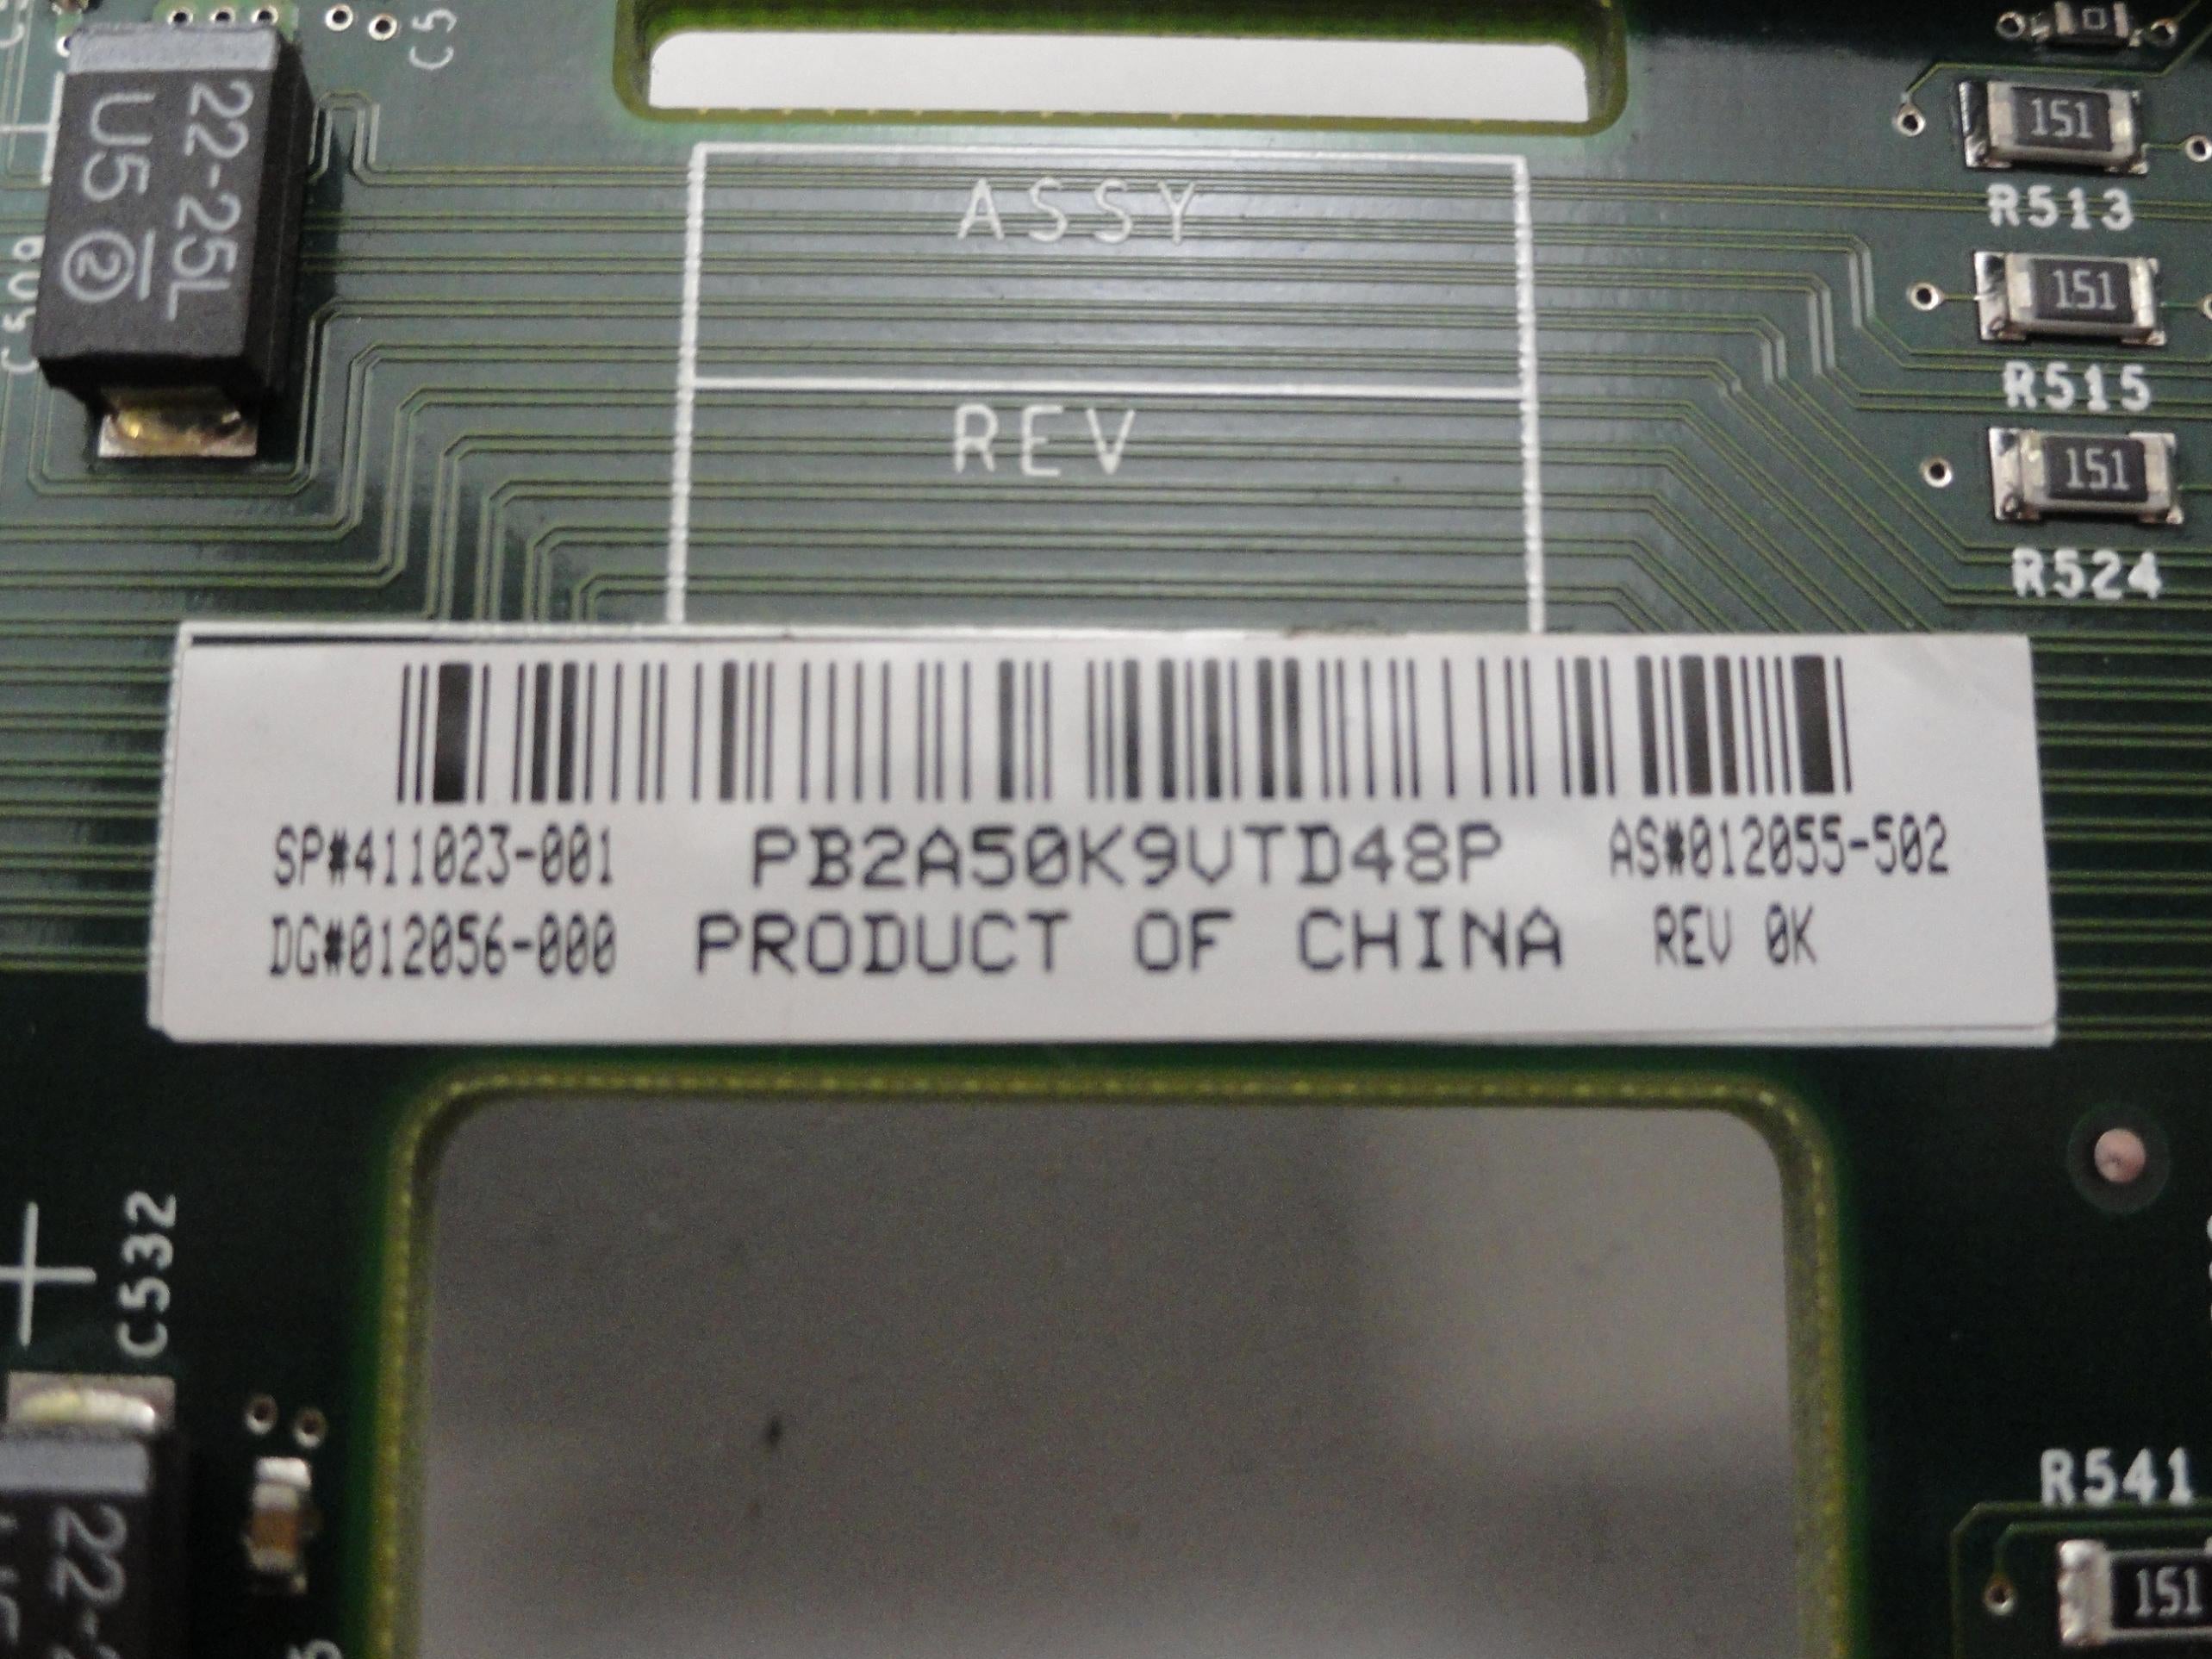 411023-001 - HP Six Bay SCSI 80 Pin Backplane - Refurbished